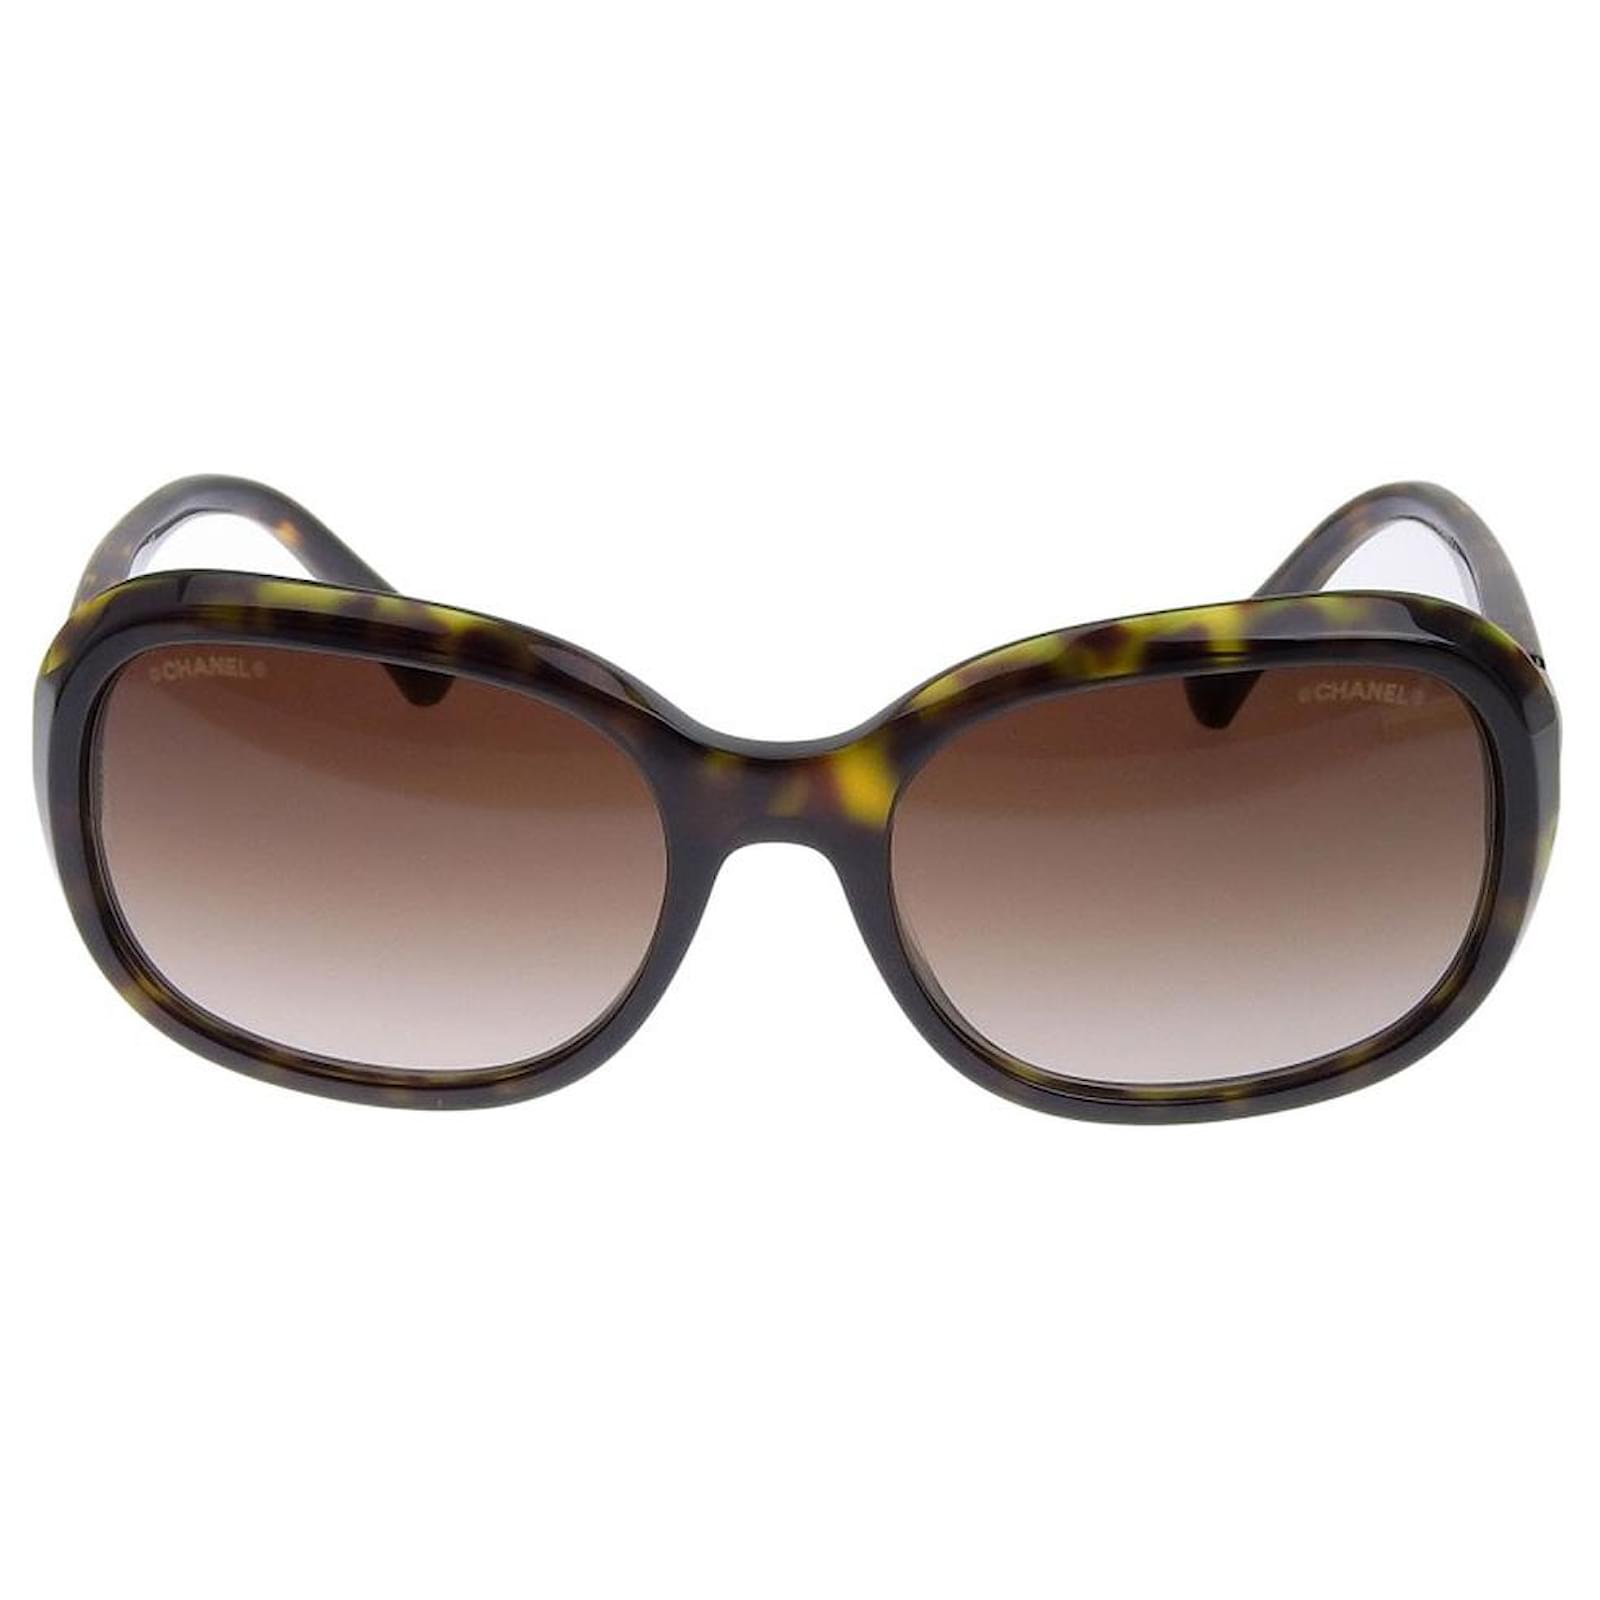 Used] Chanel CHANEL Tortoiseshell Sunglasses Black Brown 56 □ 18